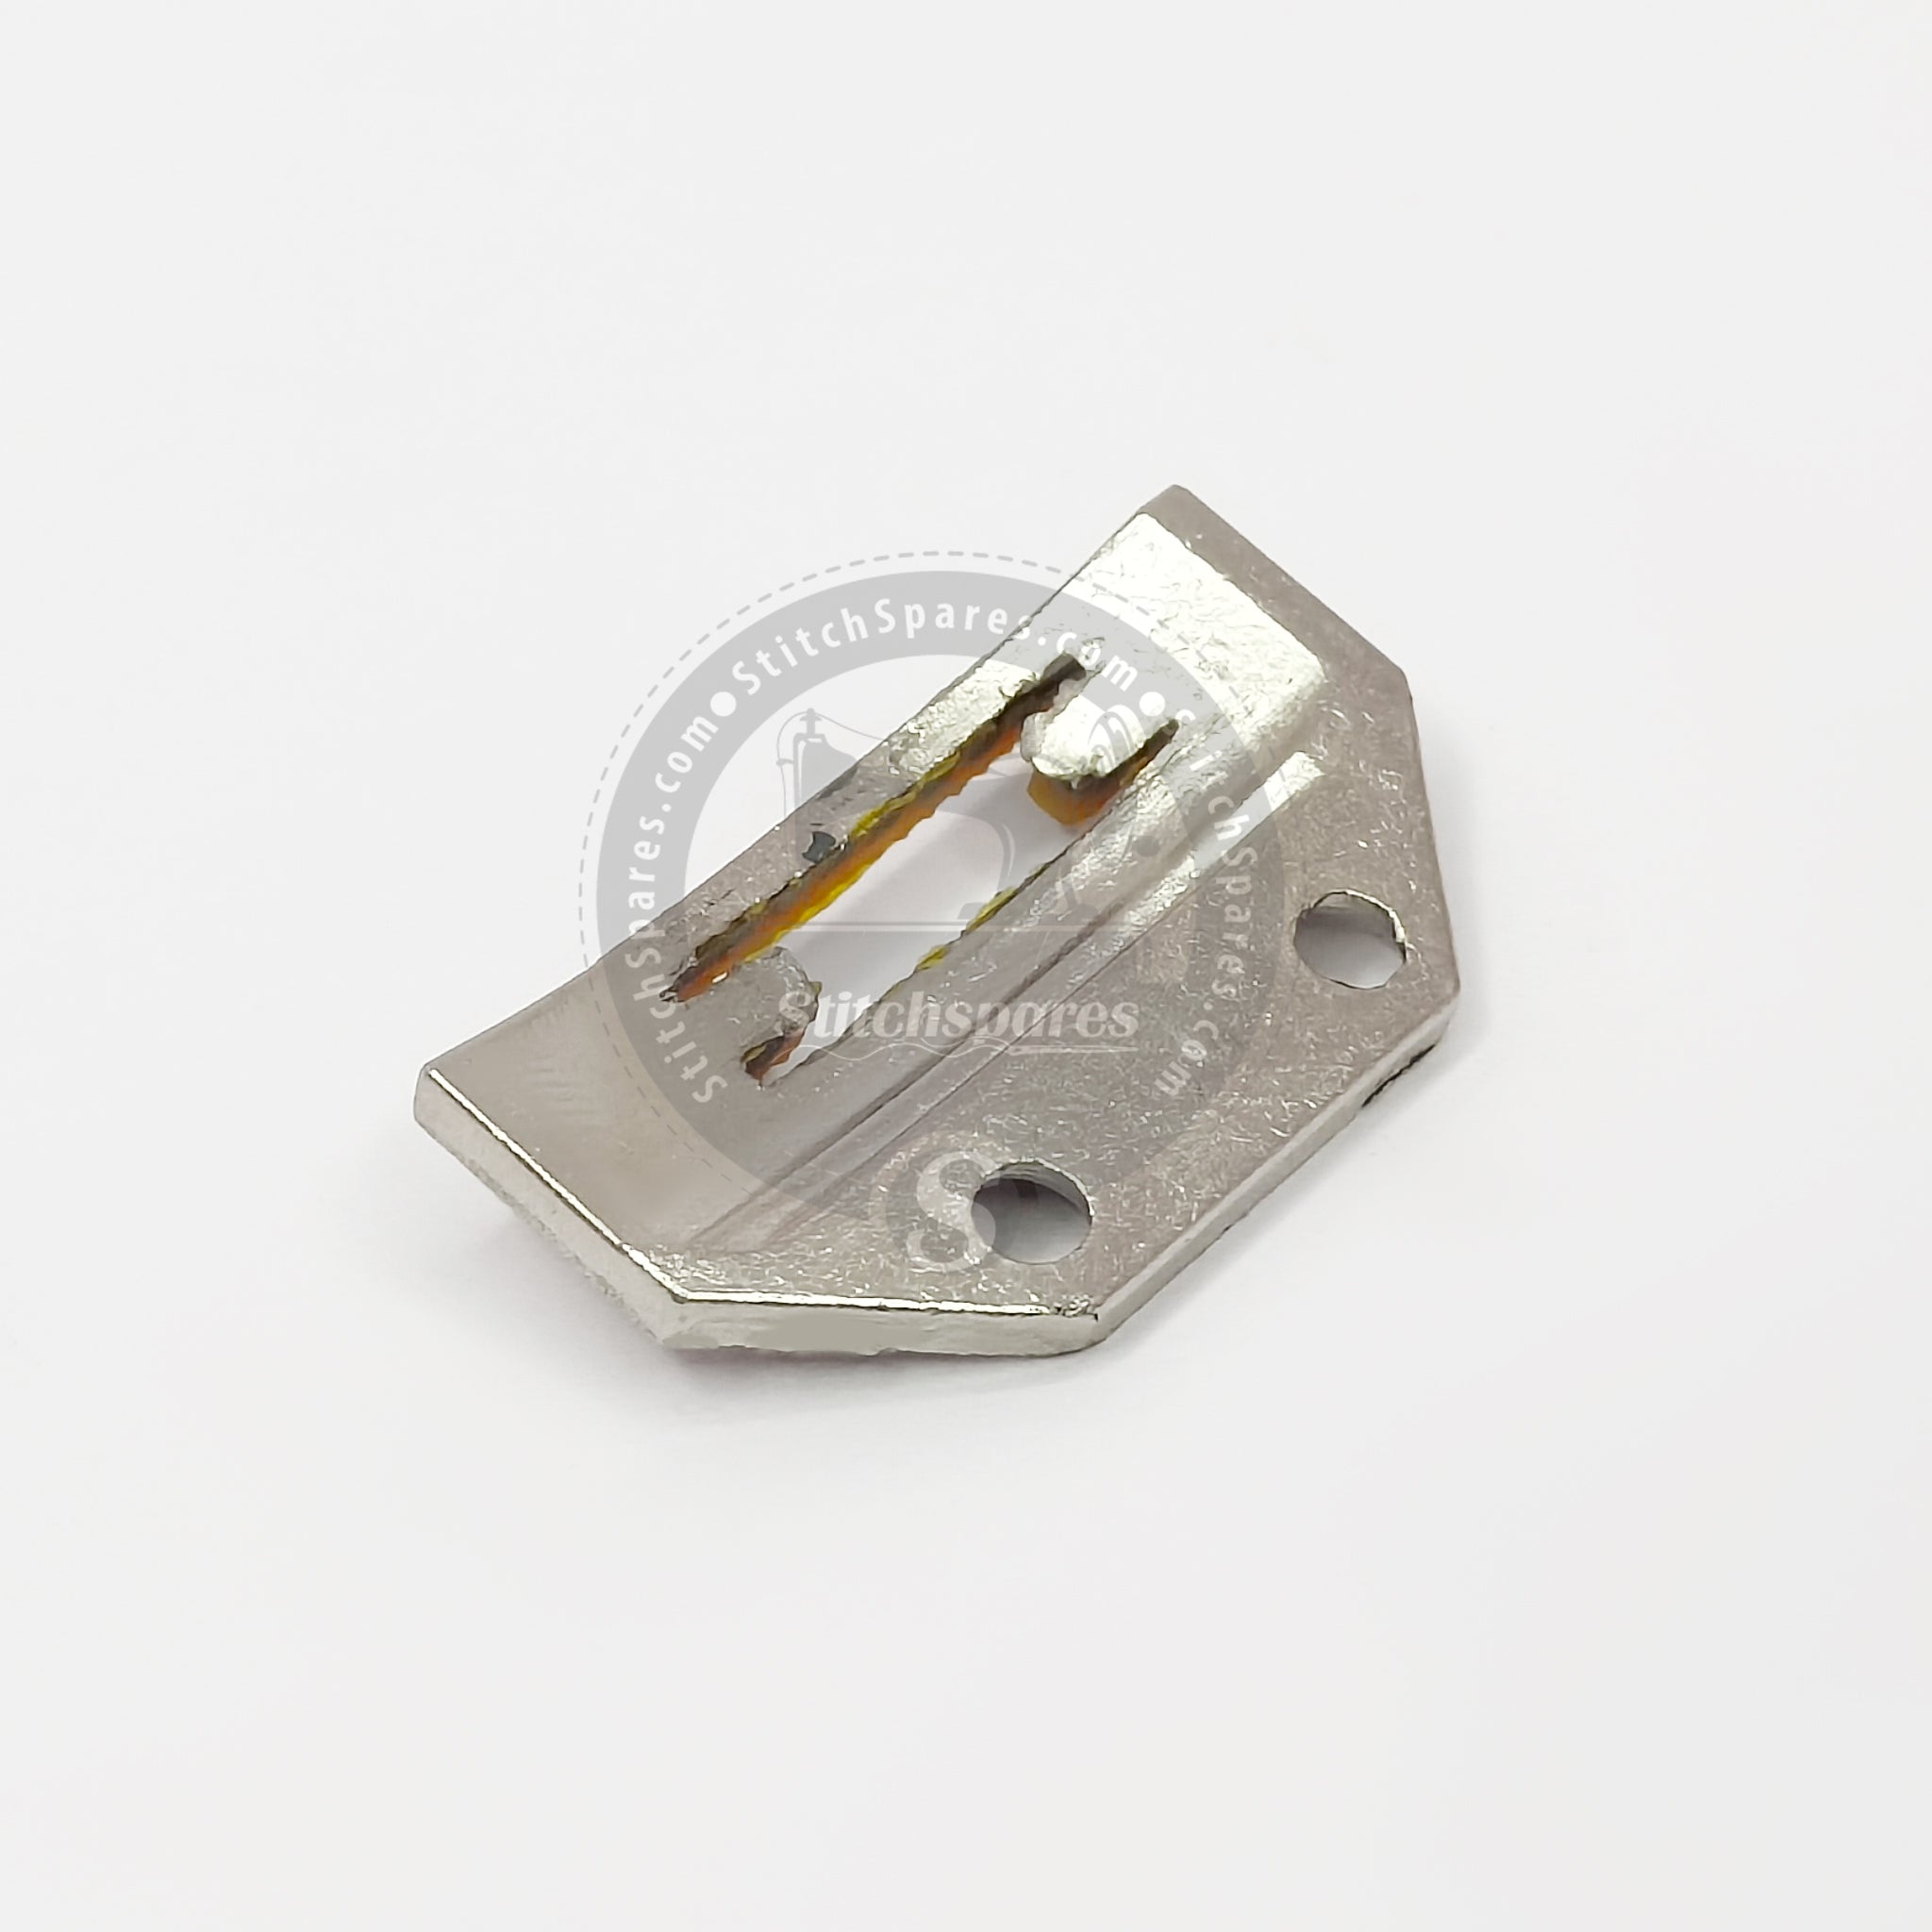 149057R Feed Dog (Teflon) Juki Single Needle Lock-Stitch-Maschine